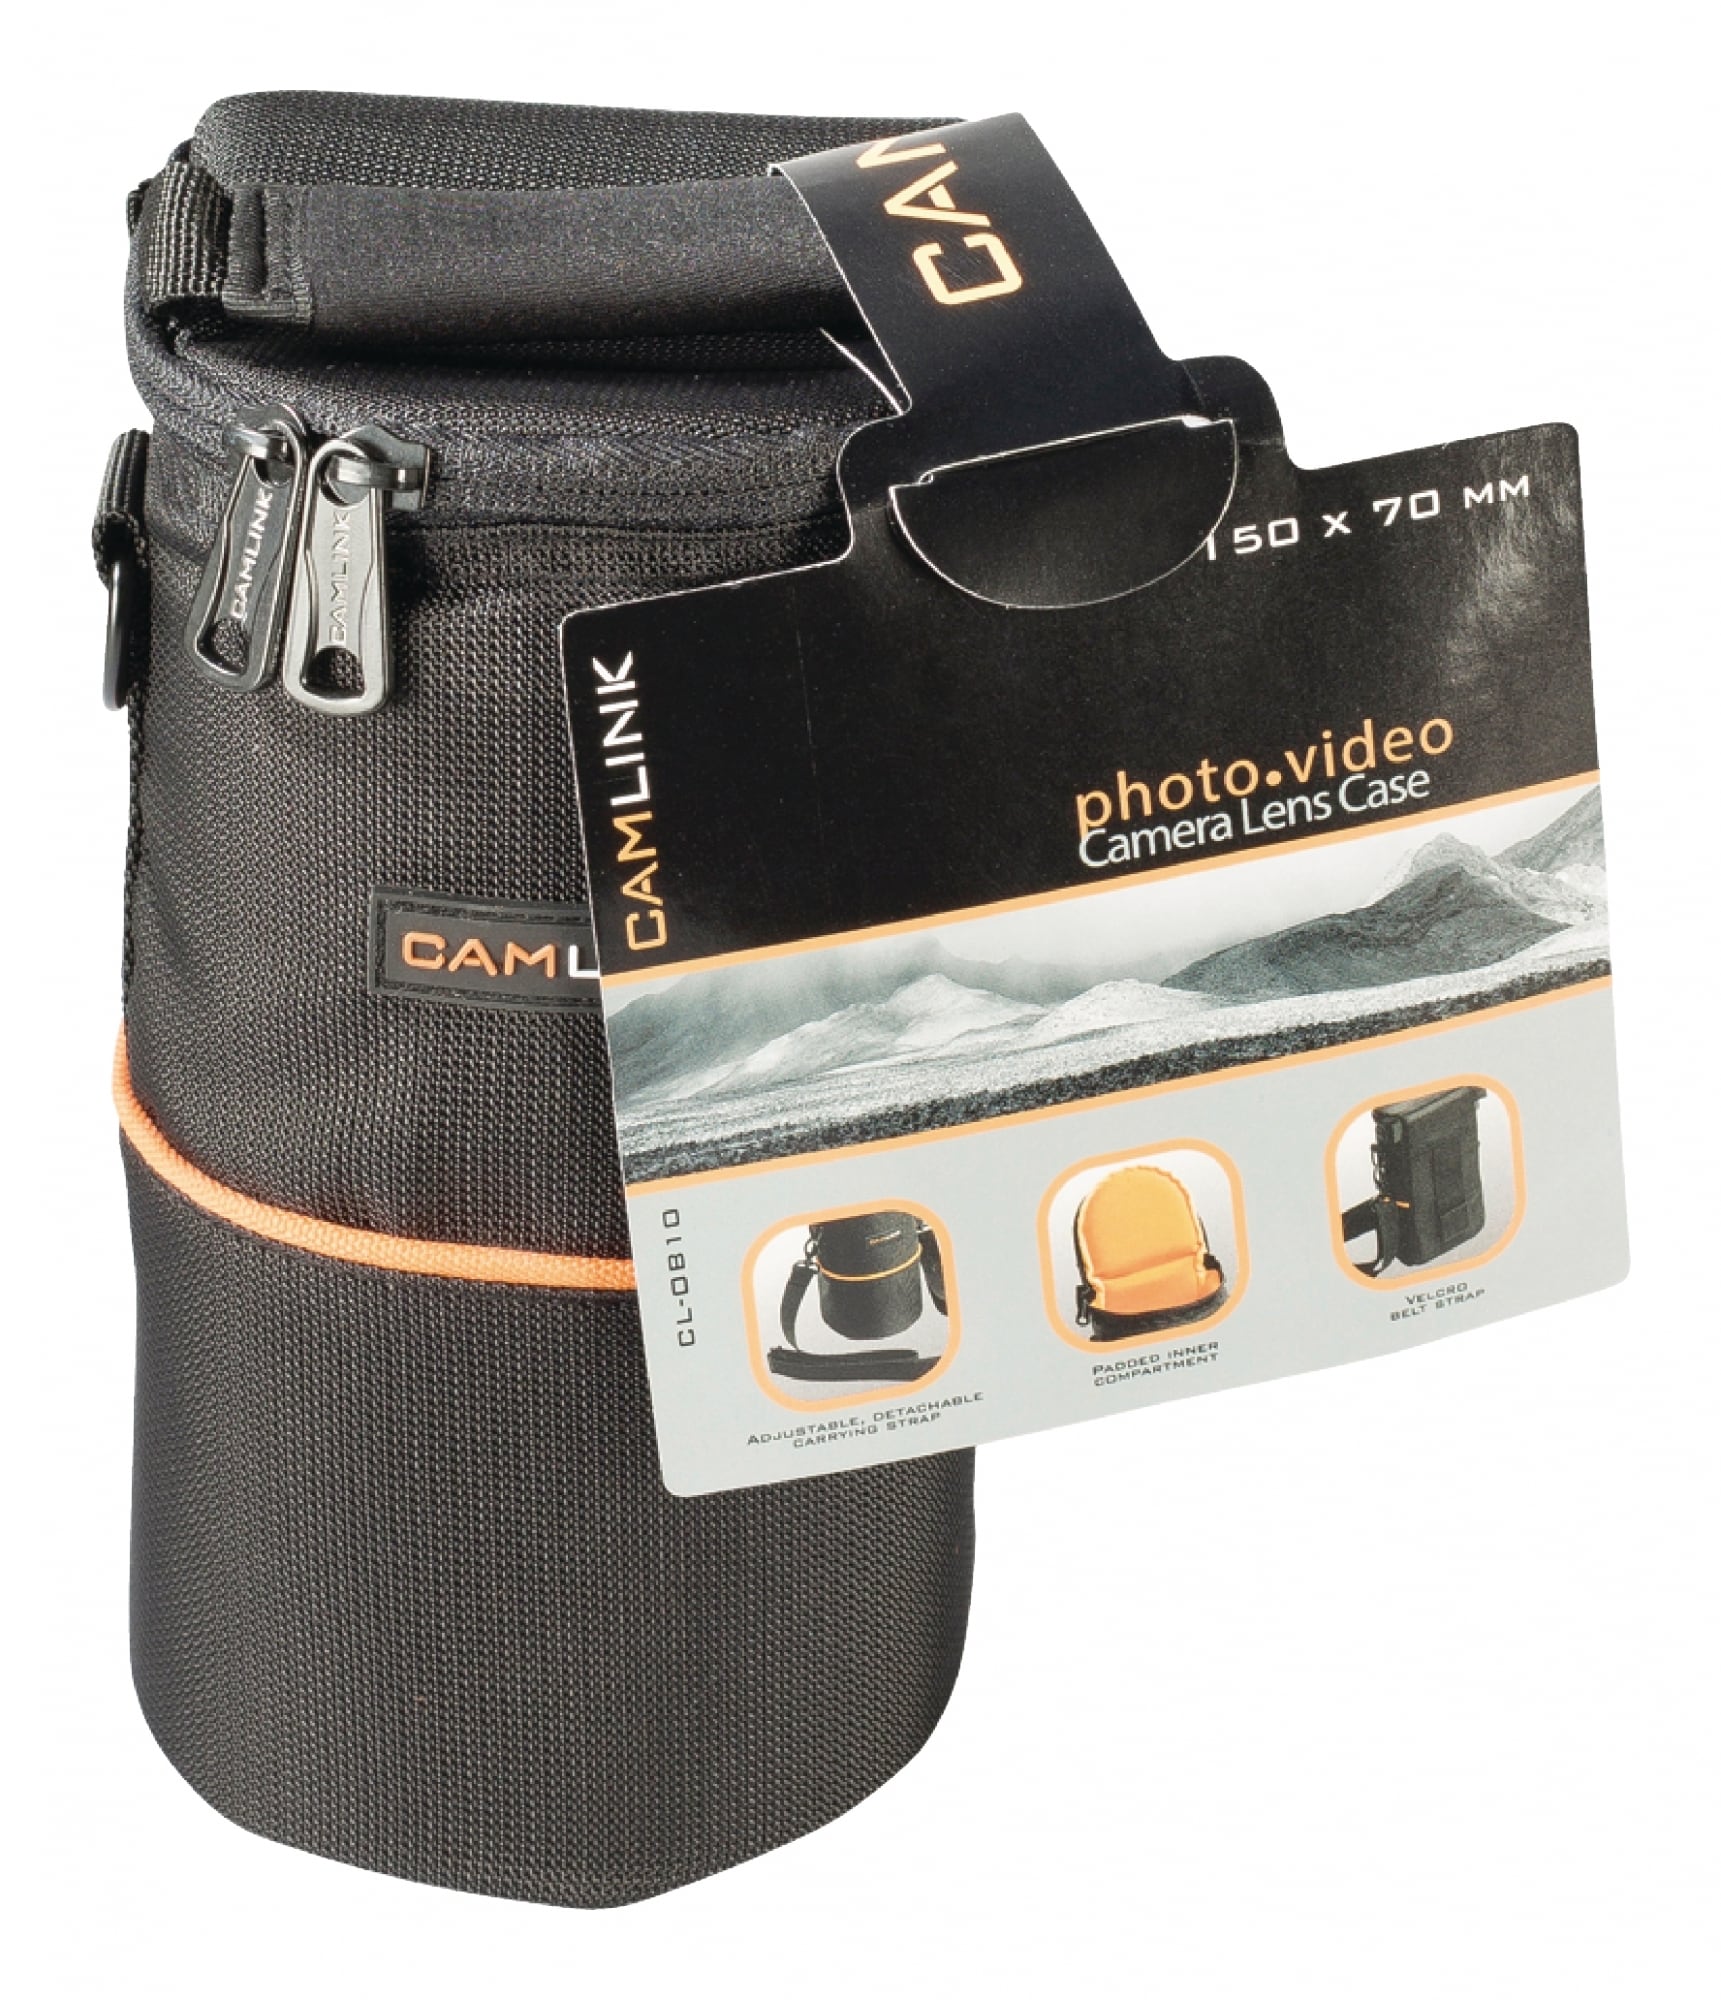 Kamera objektiv taske 90x150x70, sort/orange | Elgiganten